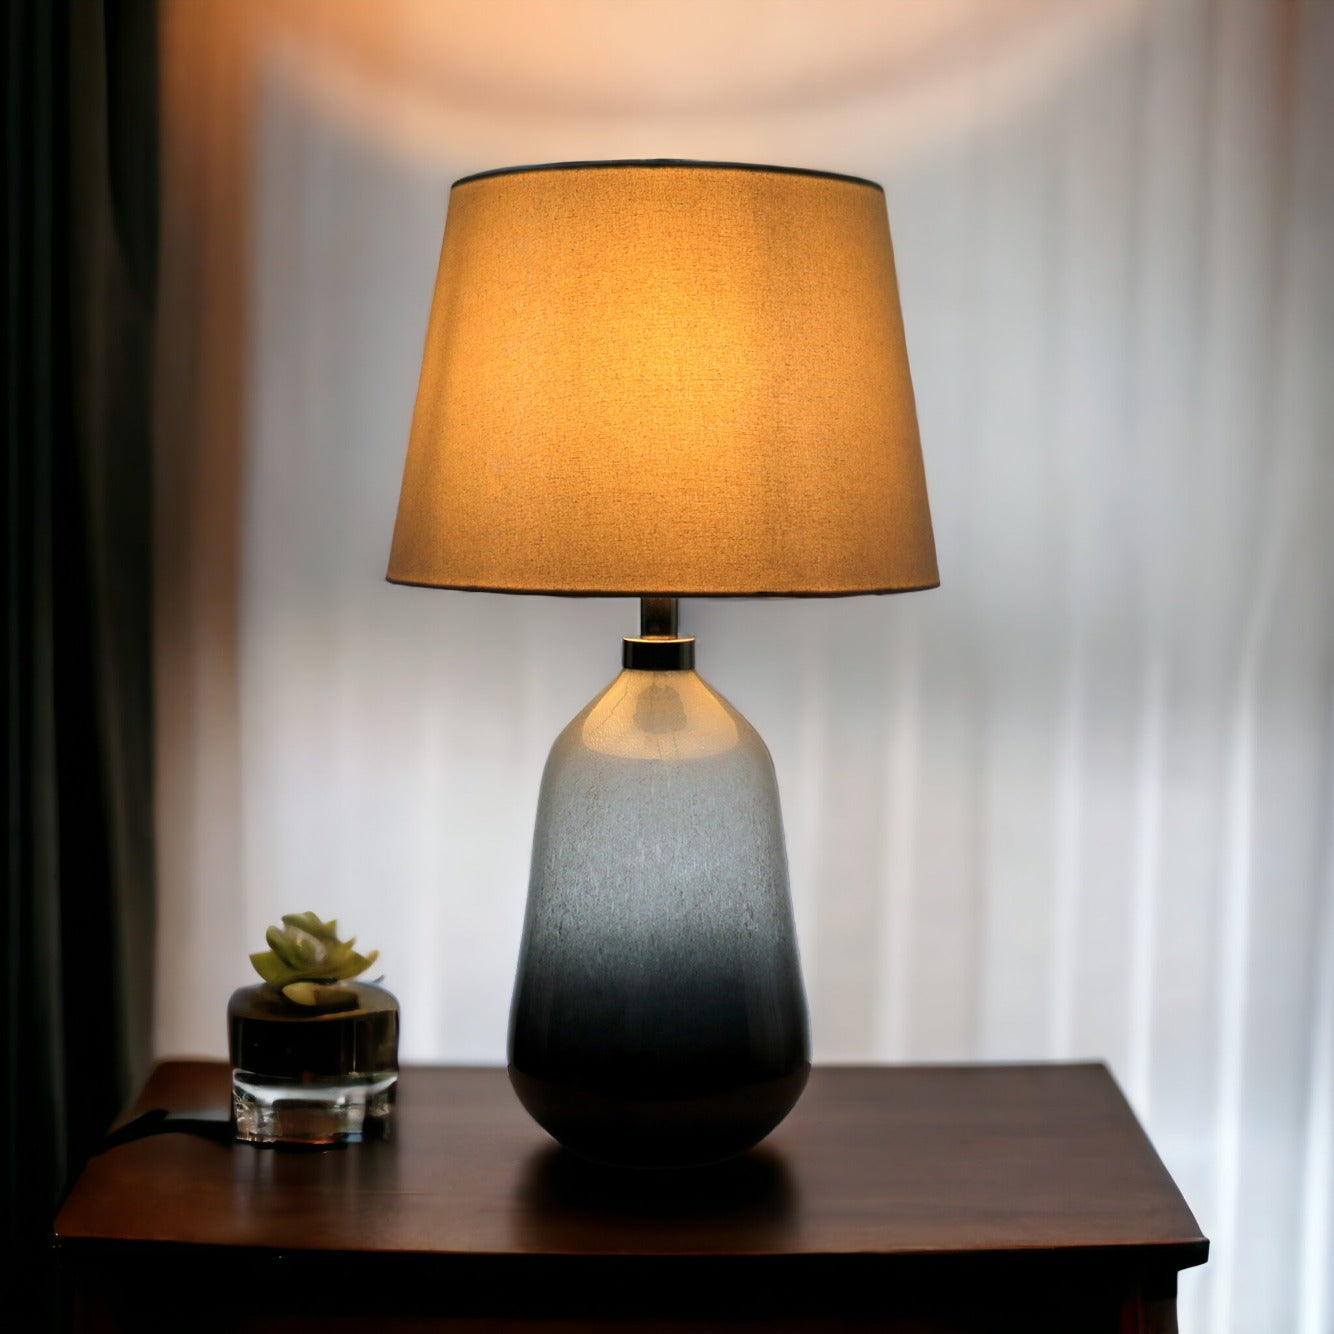 Walze Dark Table Lamp by homeblitz.in